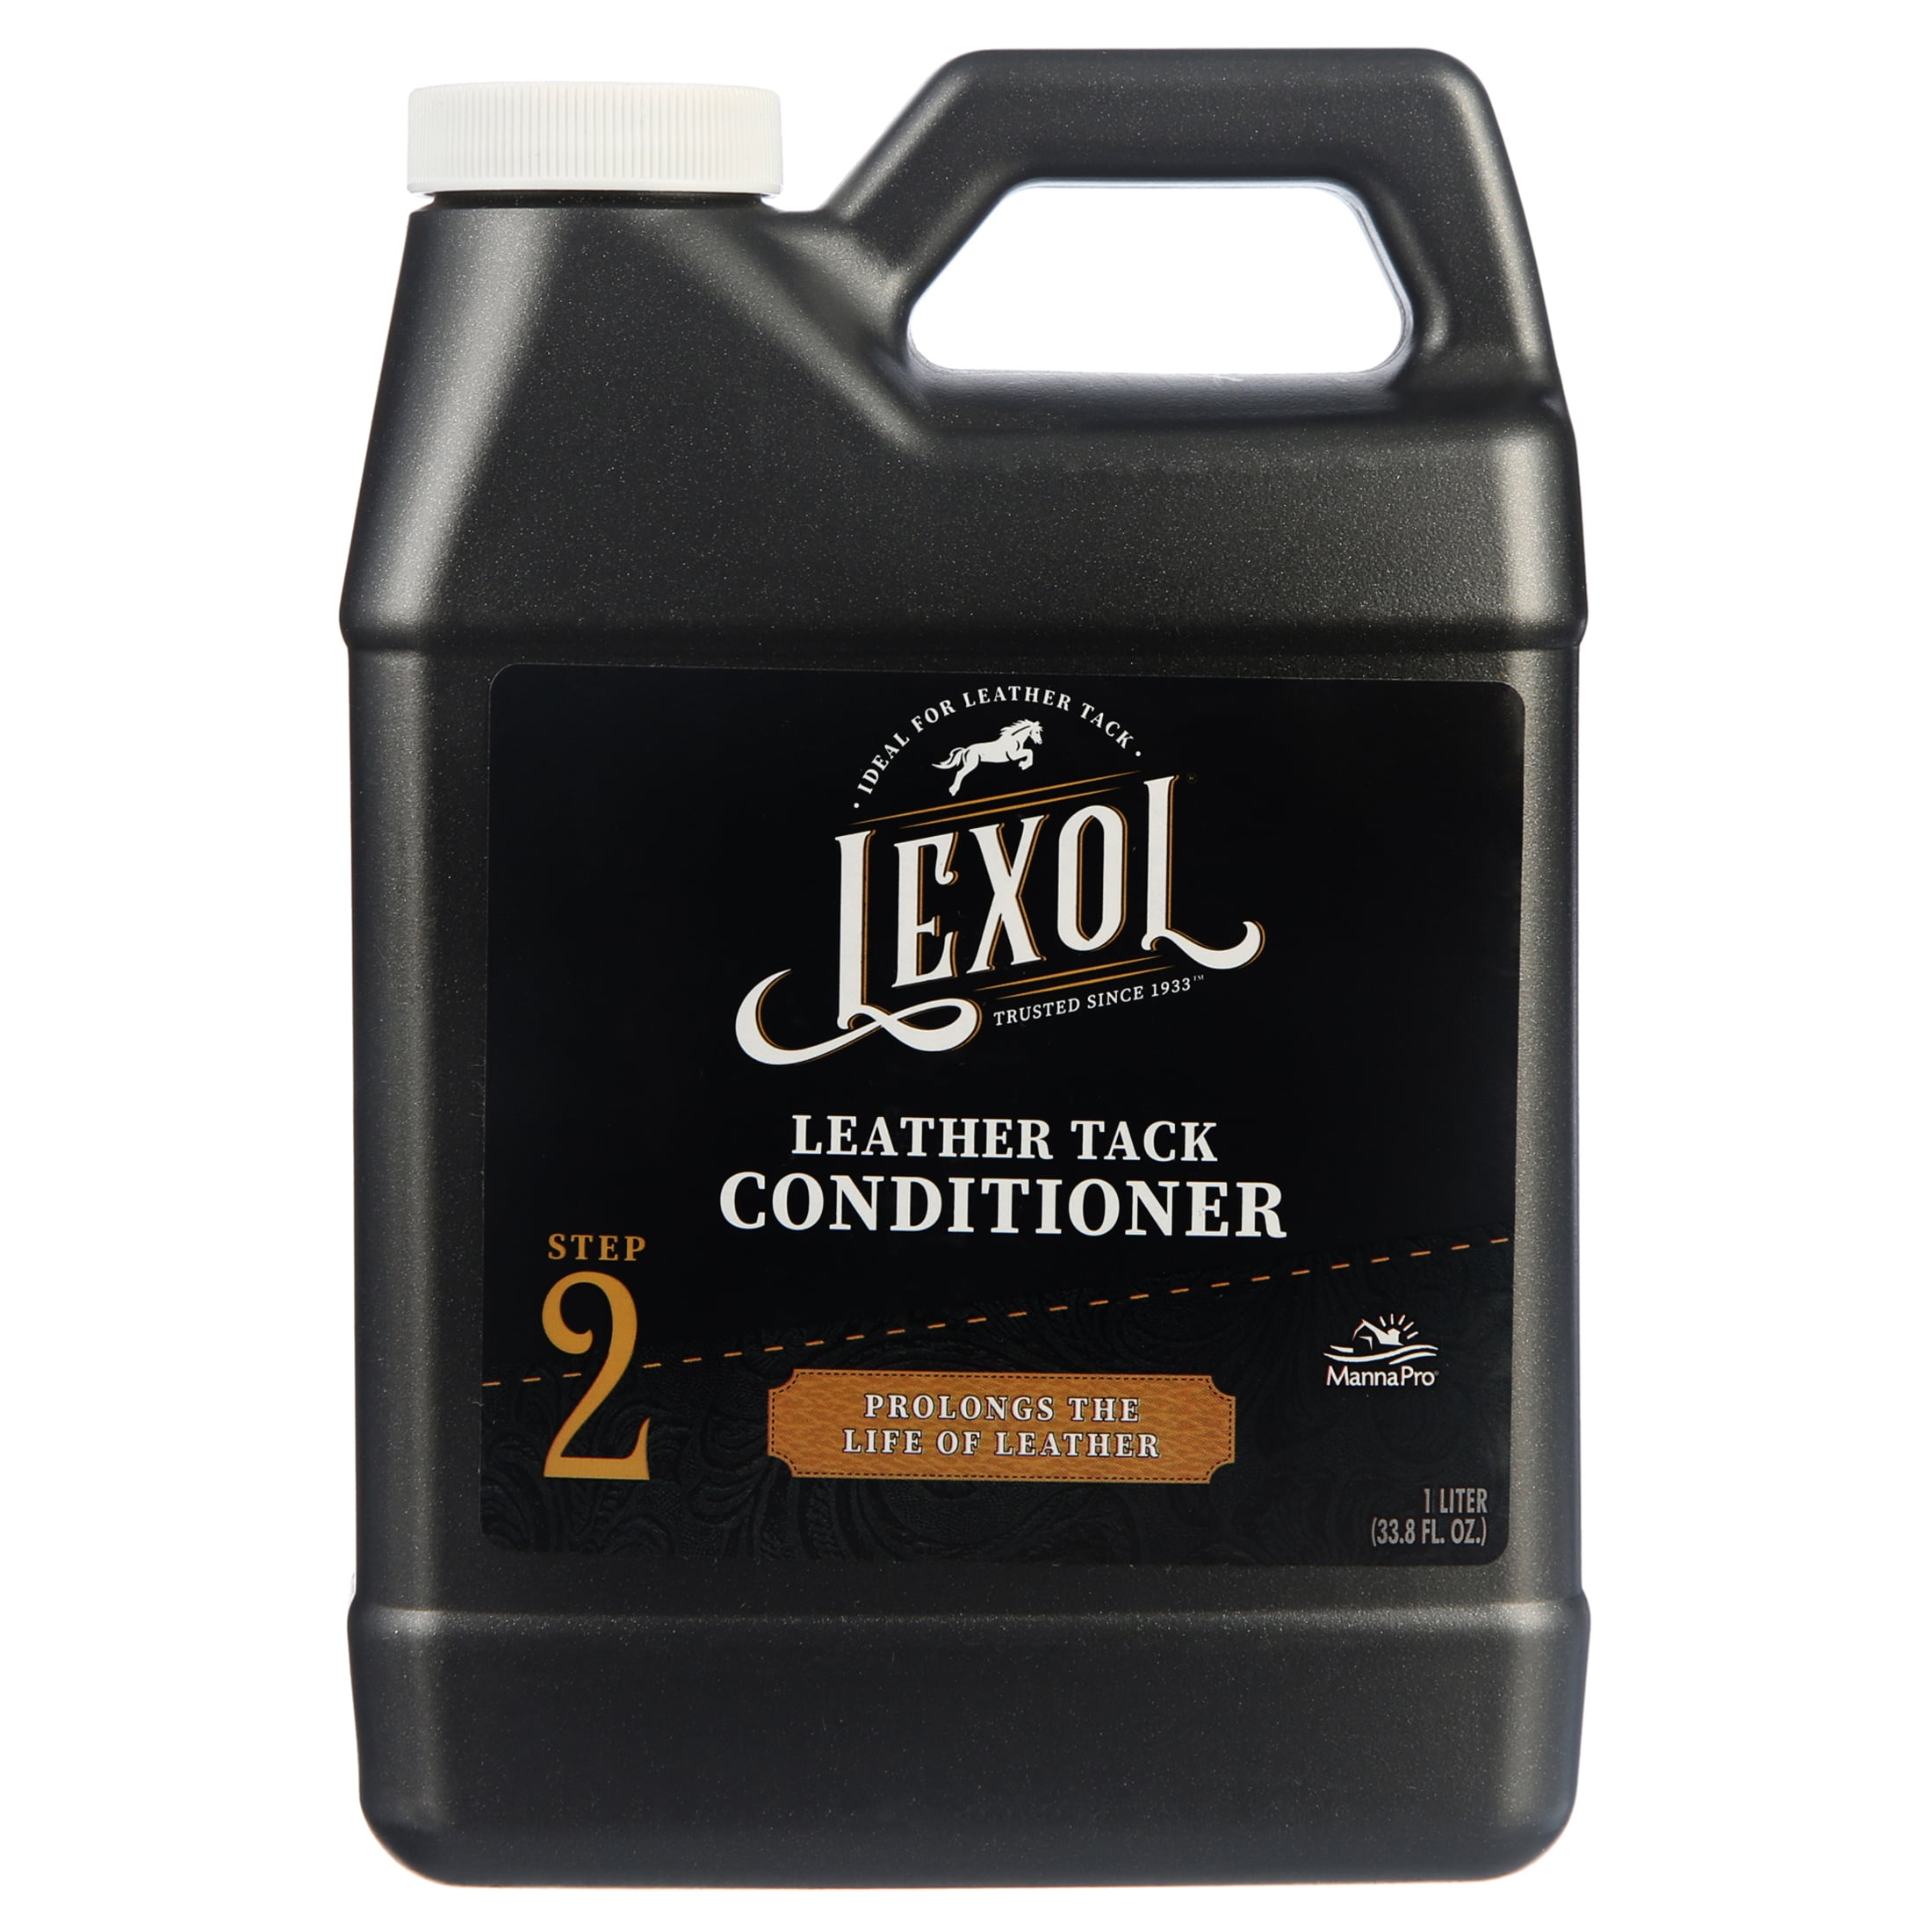 Lexol® Leather Conditioner - Aiken, SC - Aiken County Farm Supply